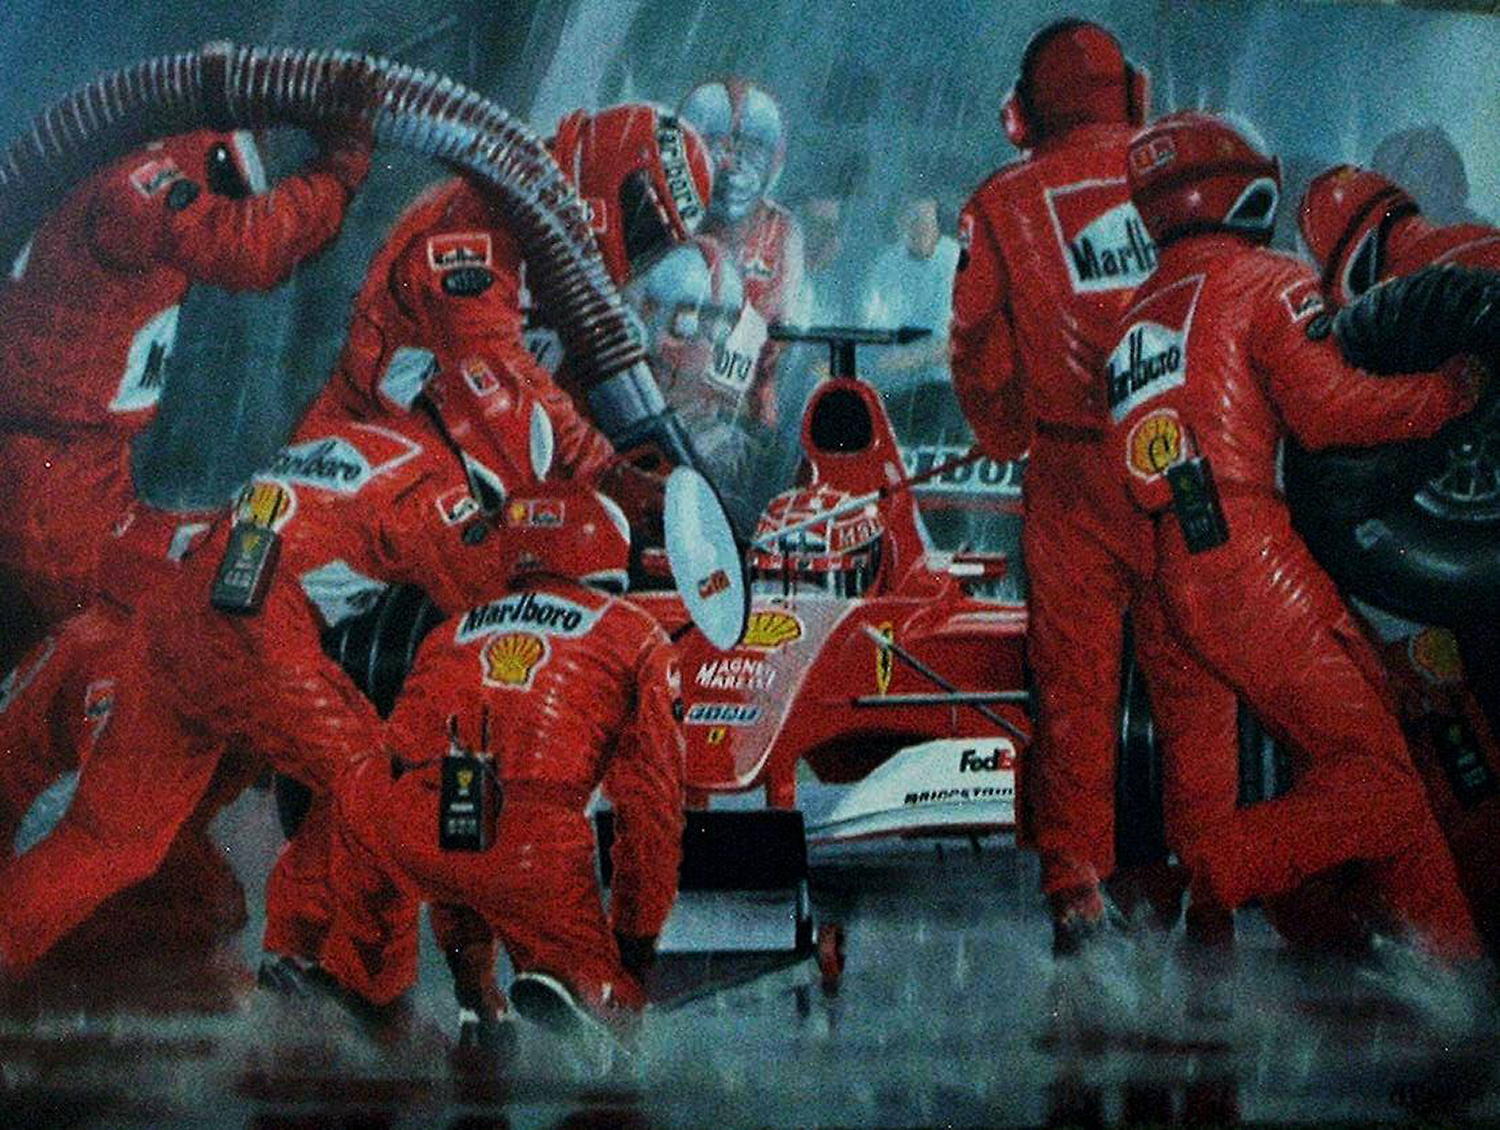 pit crew with a Ferrari - Tony South